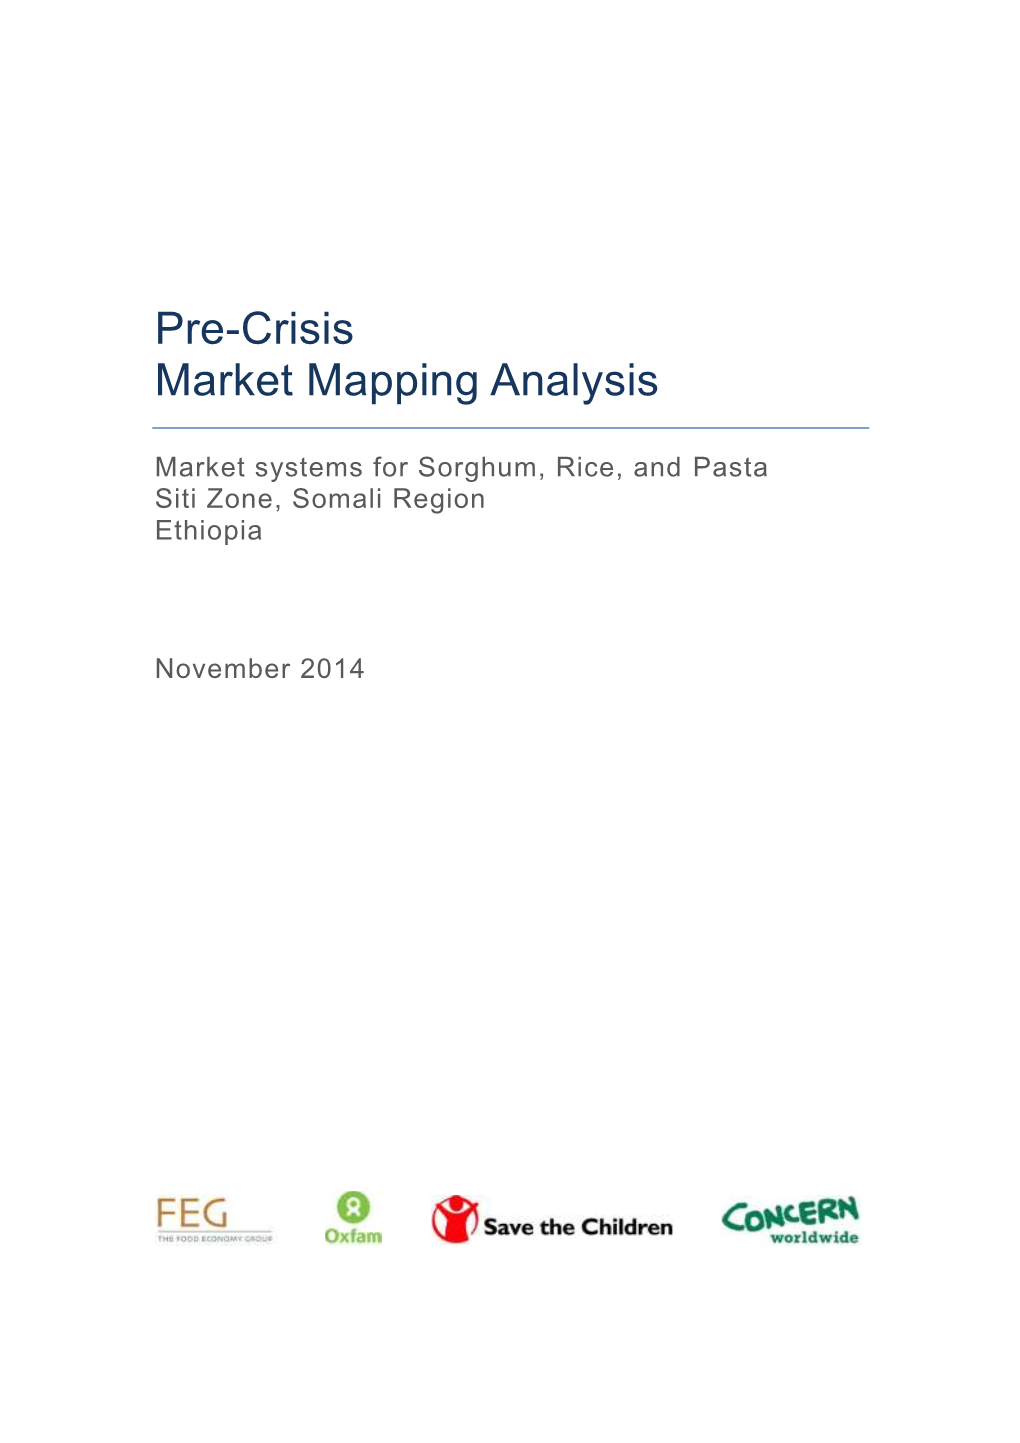 Pre-Crisis Market Mapping Analysis